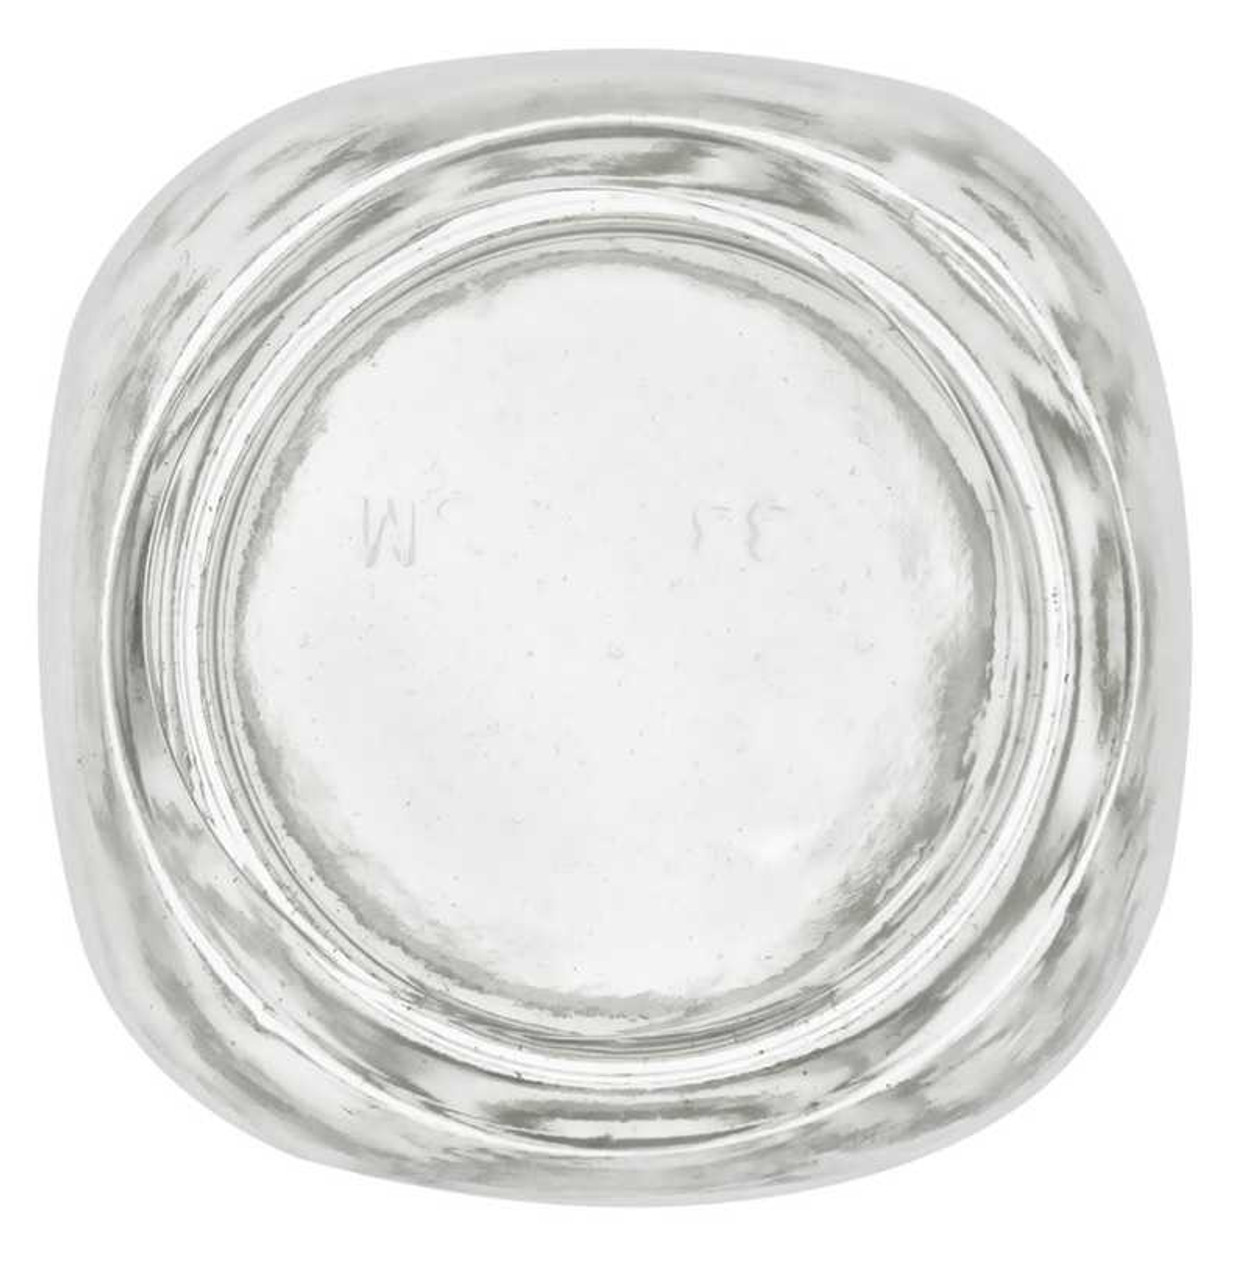 6 oz Clear Glass Oval Hexagon Jars w/ Black Metal Lug Caps